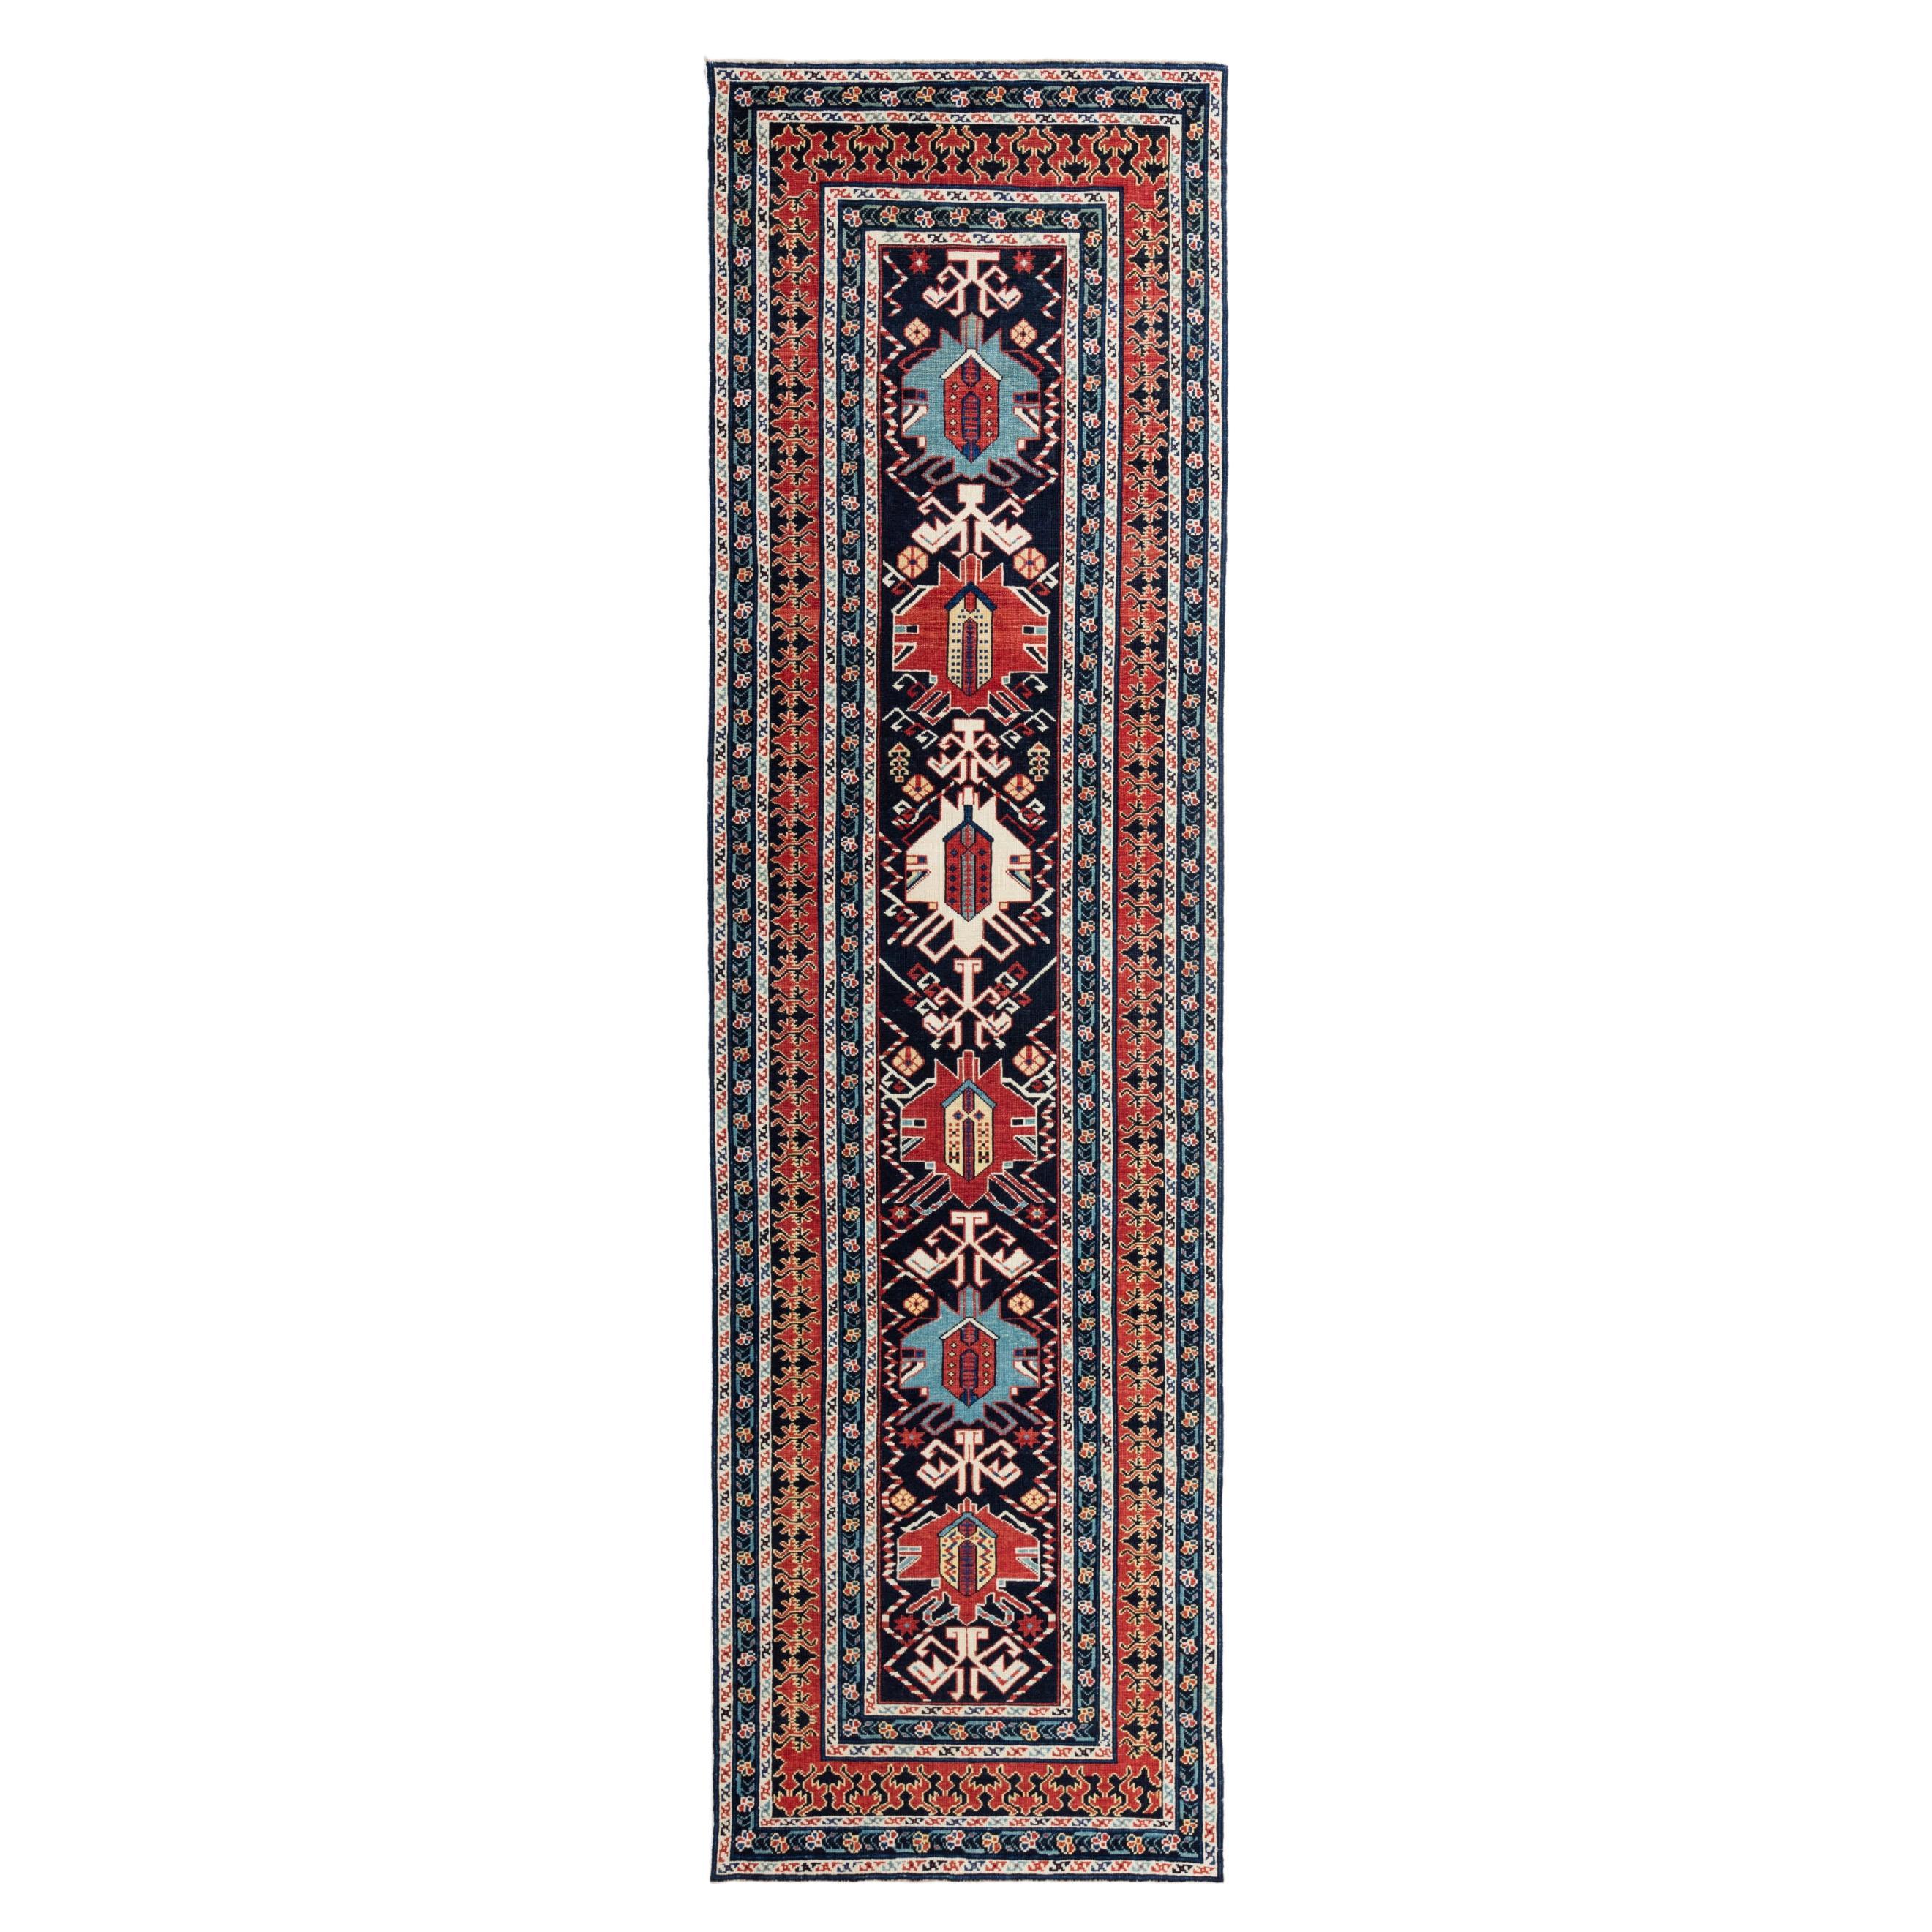 Ararat Rugs Kuba Rug with Palmettes Caucasian Revival Carpet - Natural Dyed